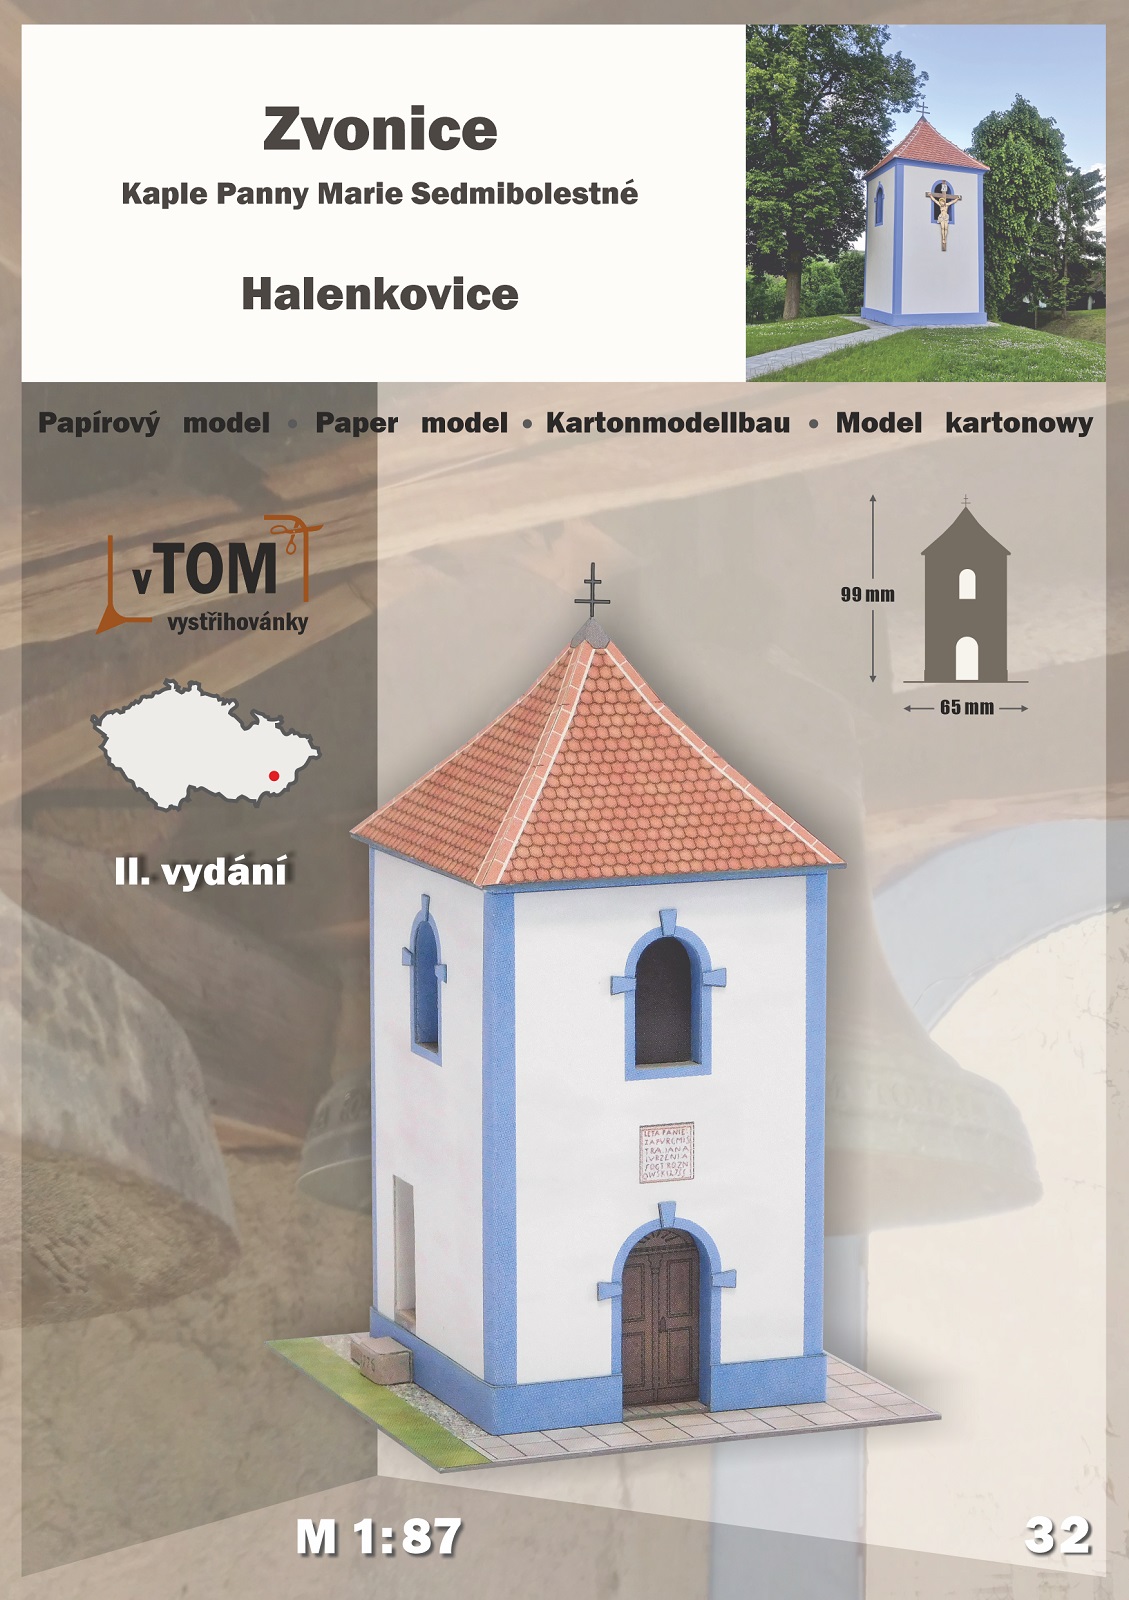 Zvonice - kaple Panny Marie Sedmibolestné, Halenkovice